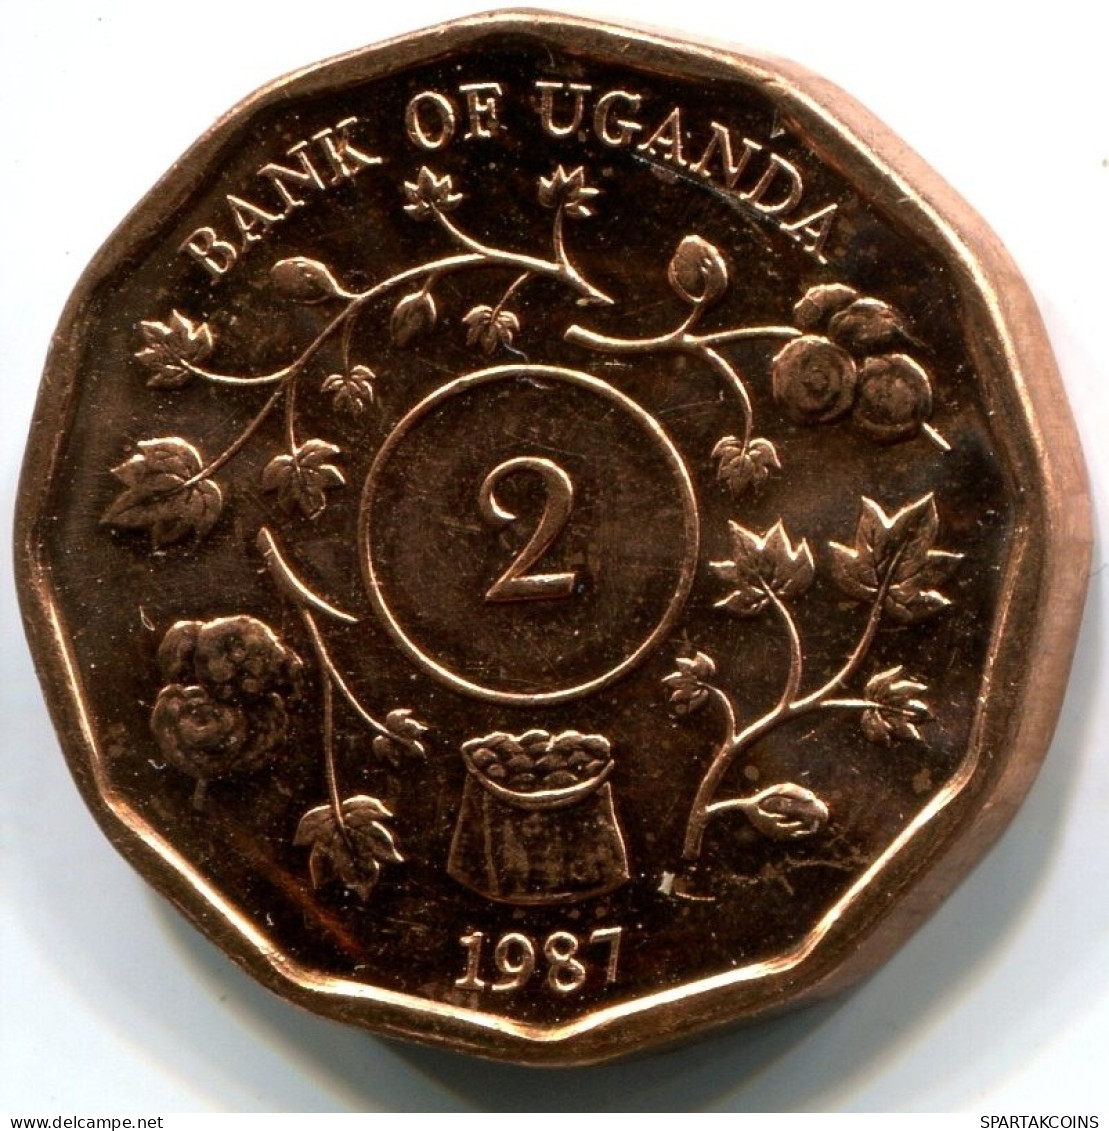 2 SHILLINGS 1987 UGANDA UNC Münze #W11246.D.A - Oeganda